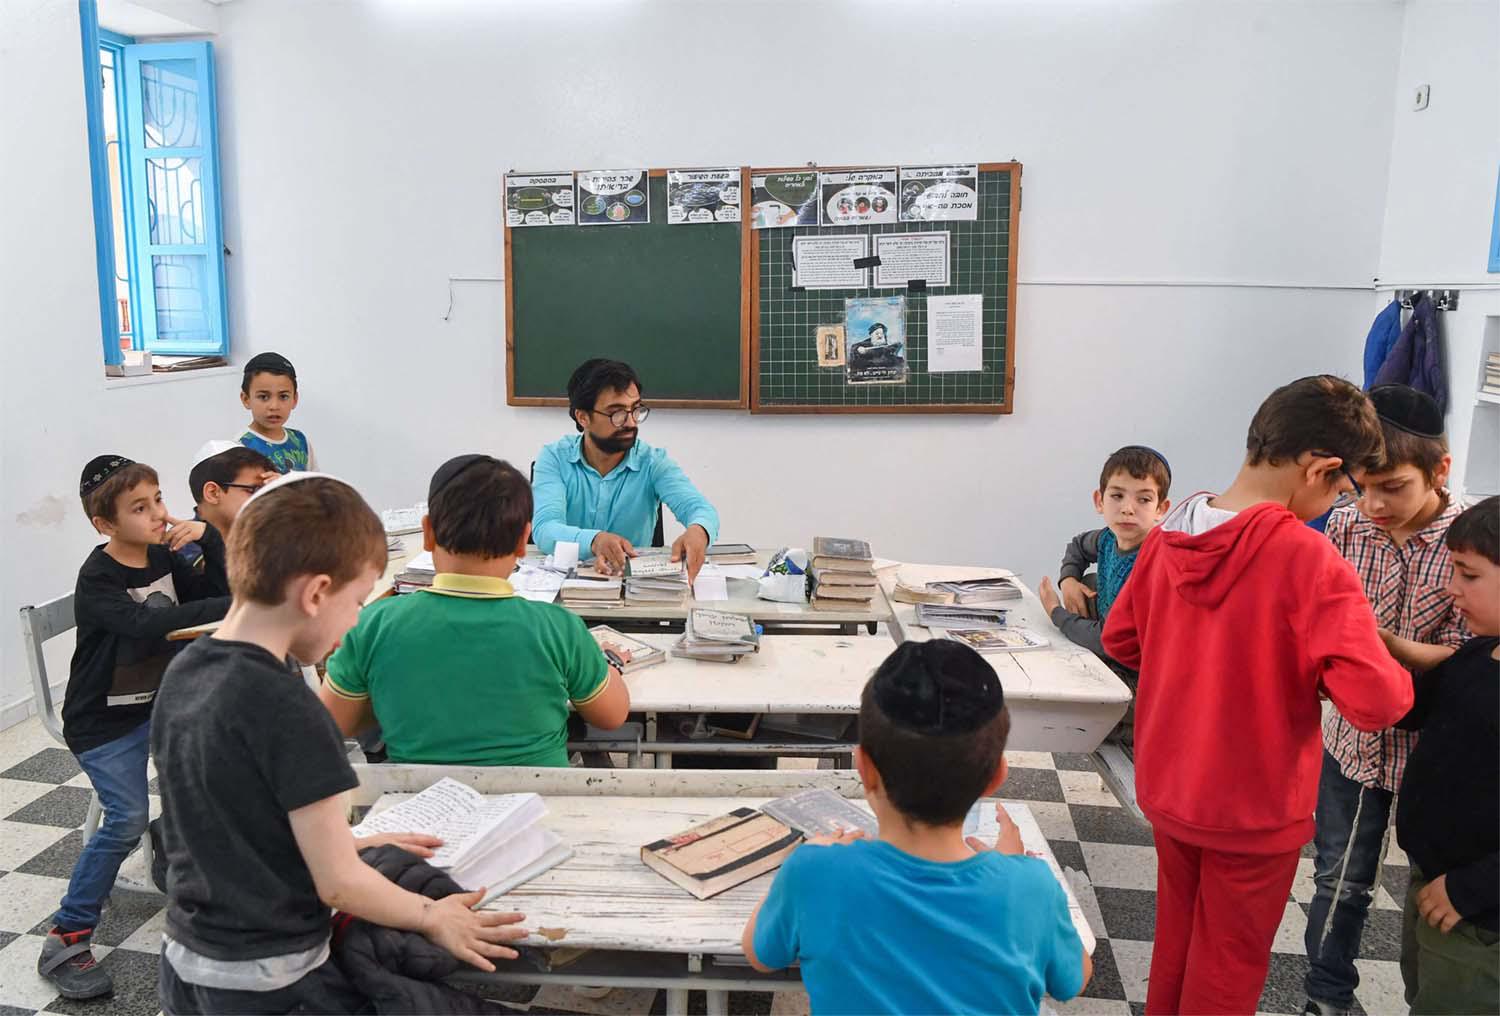 Teachers in Tunisia have refused to hand in school grades